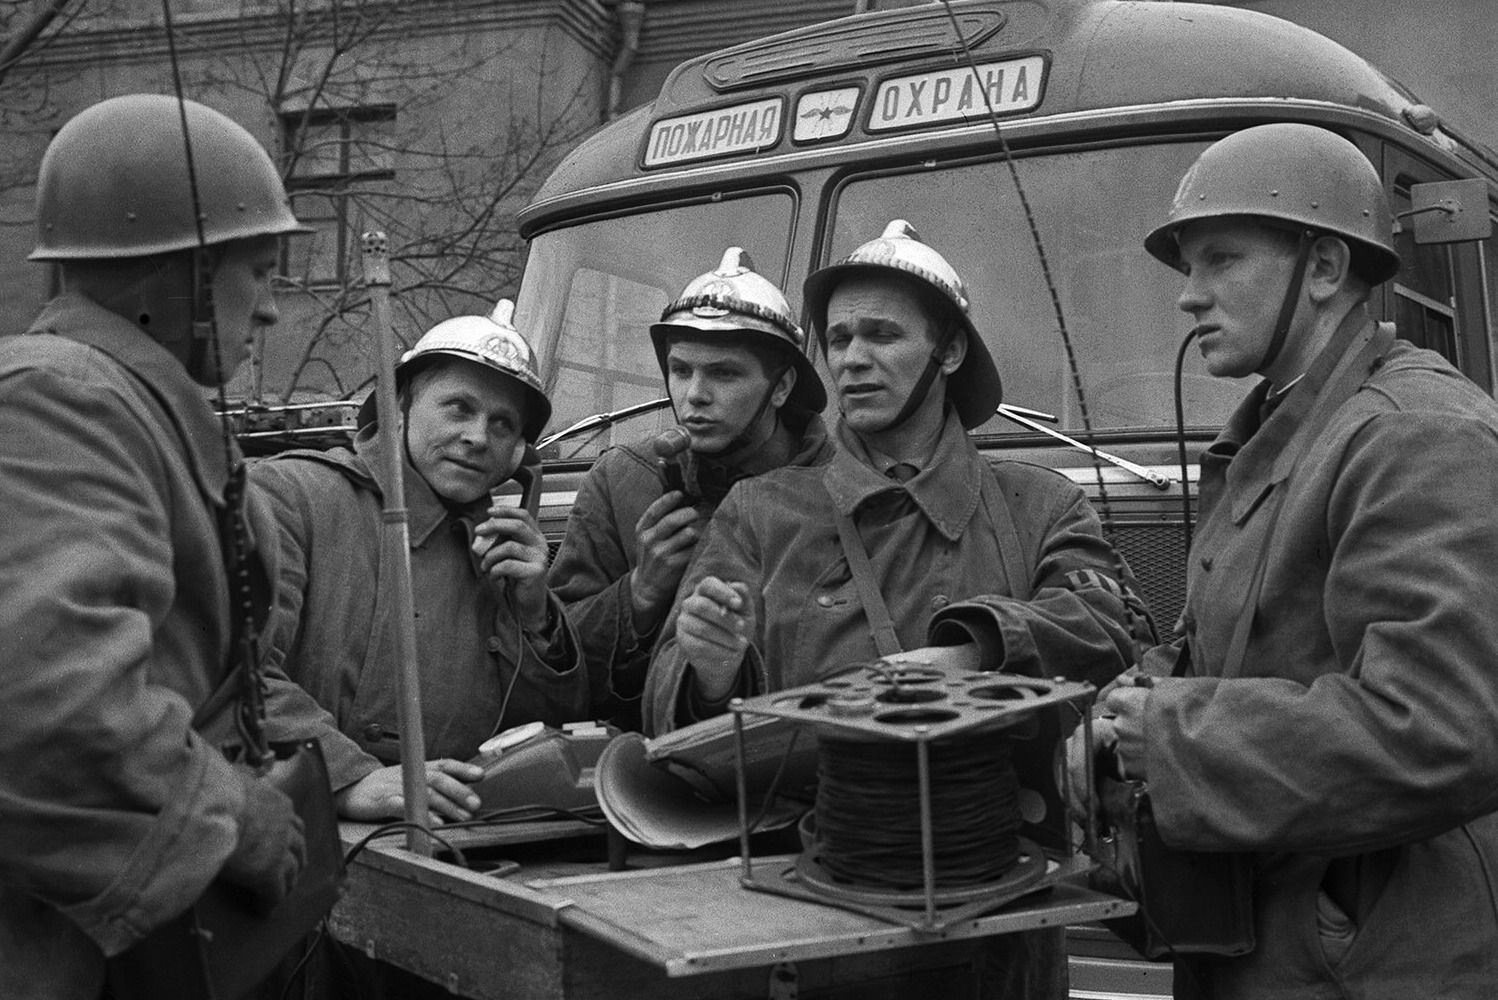 17 апреля 20 года. Пожарная охрана Москвы, 1960 год. Советская пожарная охрана СССР. Советская пожарная охрана 17 апреля 1918. Пожарная охрана СССР 50-Е годы.